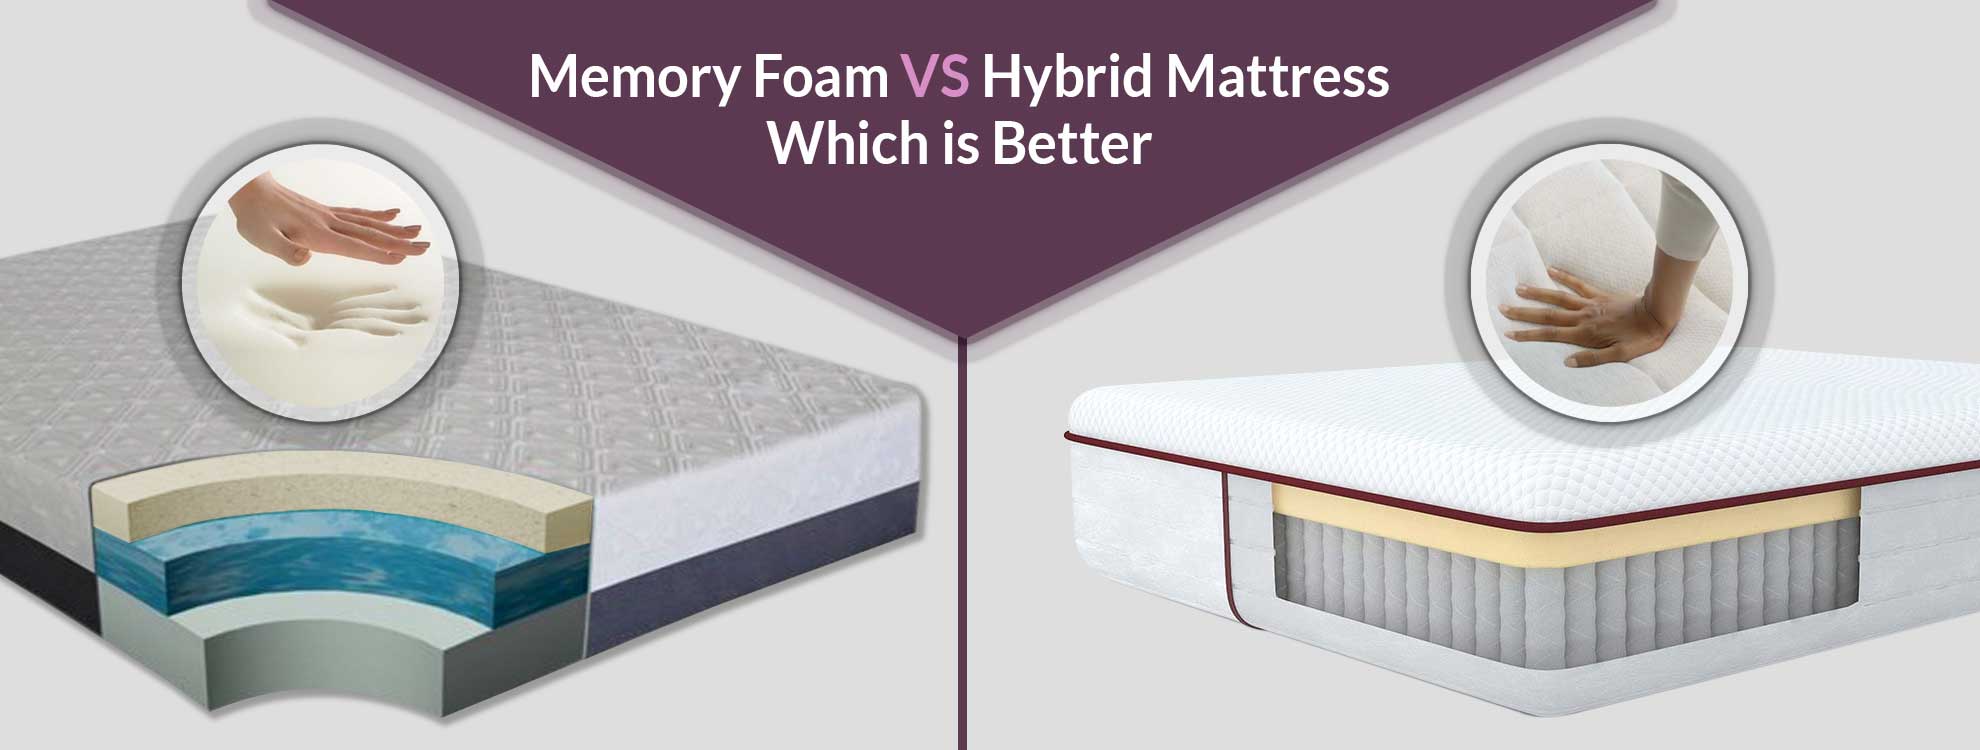 fco hybrid memory foam mattress reviews